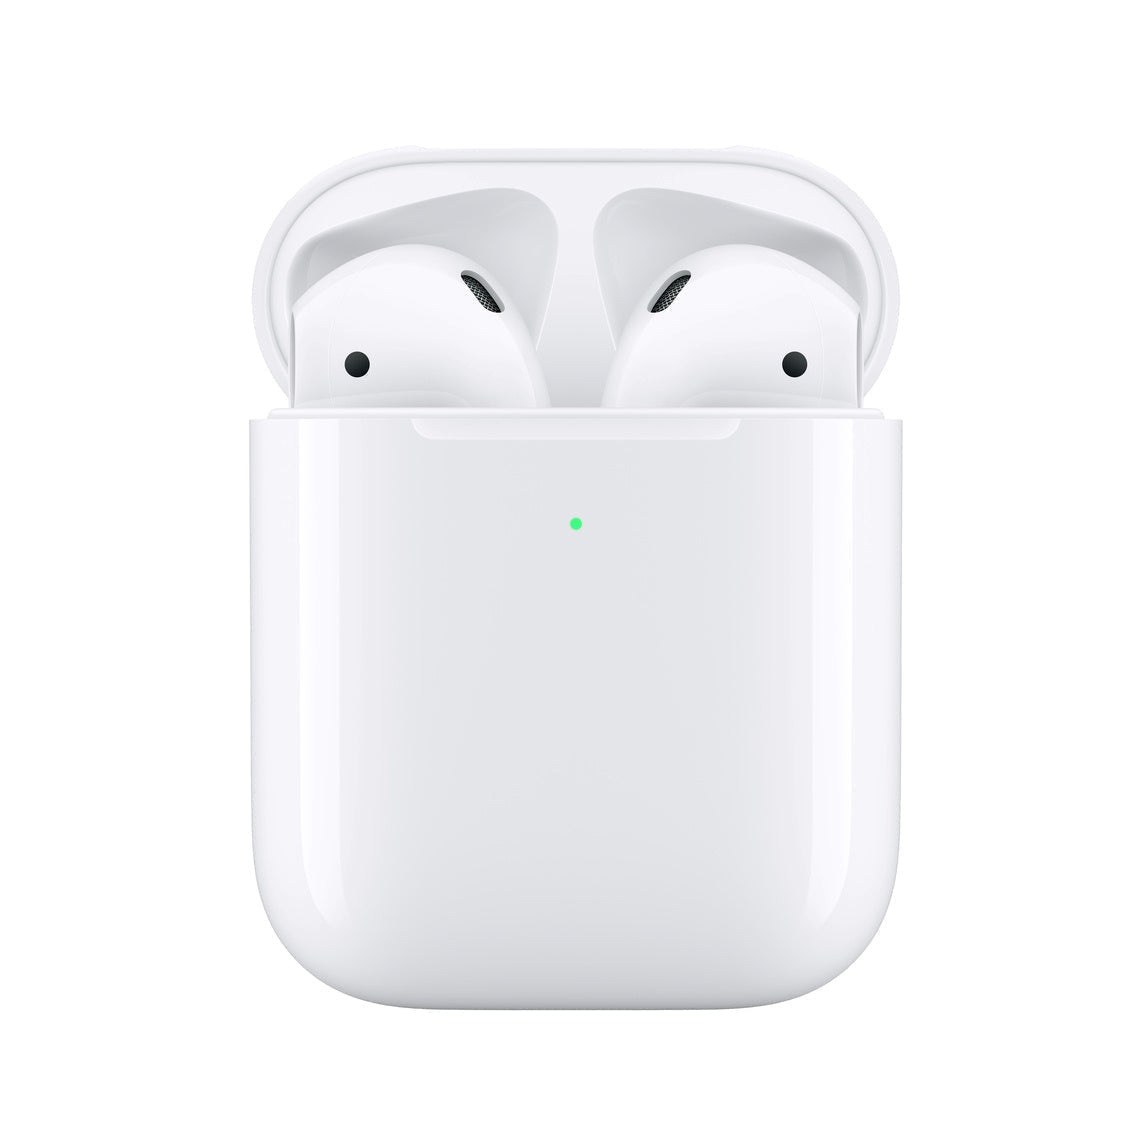 Producto de prueba de IVA EarPods para iPhone adaptables para iPhone 12, iPhone 13 mini, iPhone 13 Pro